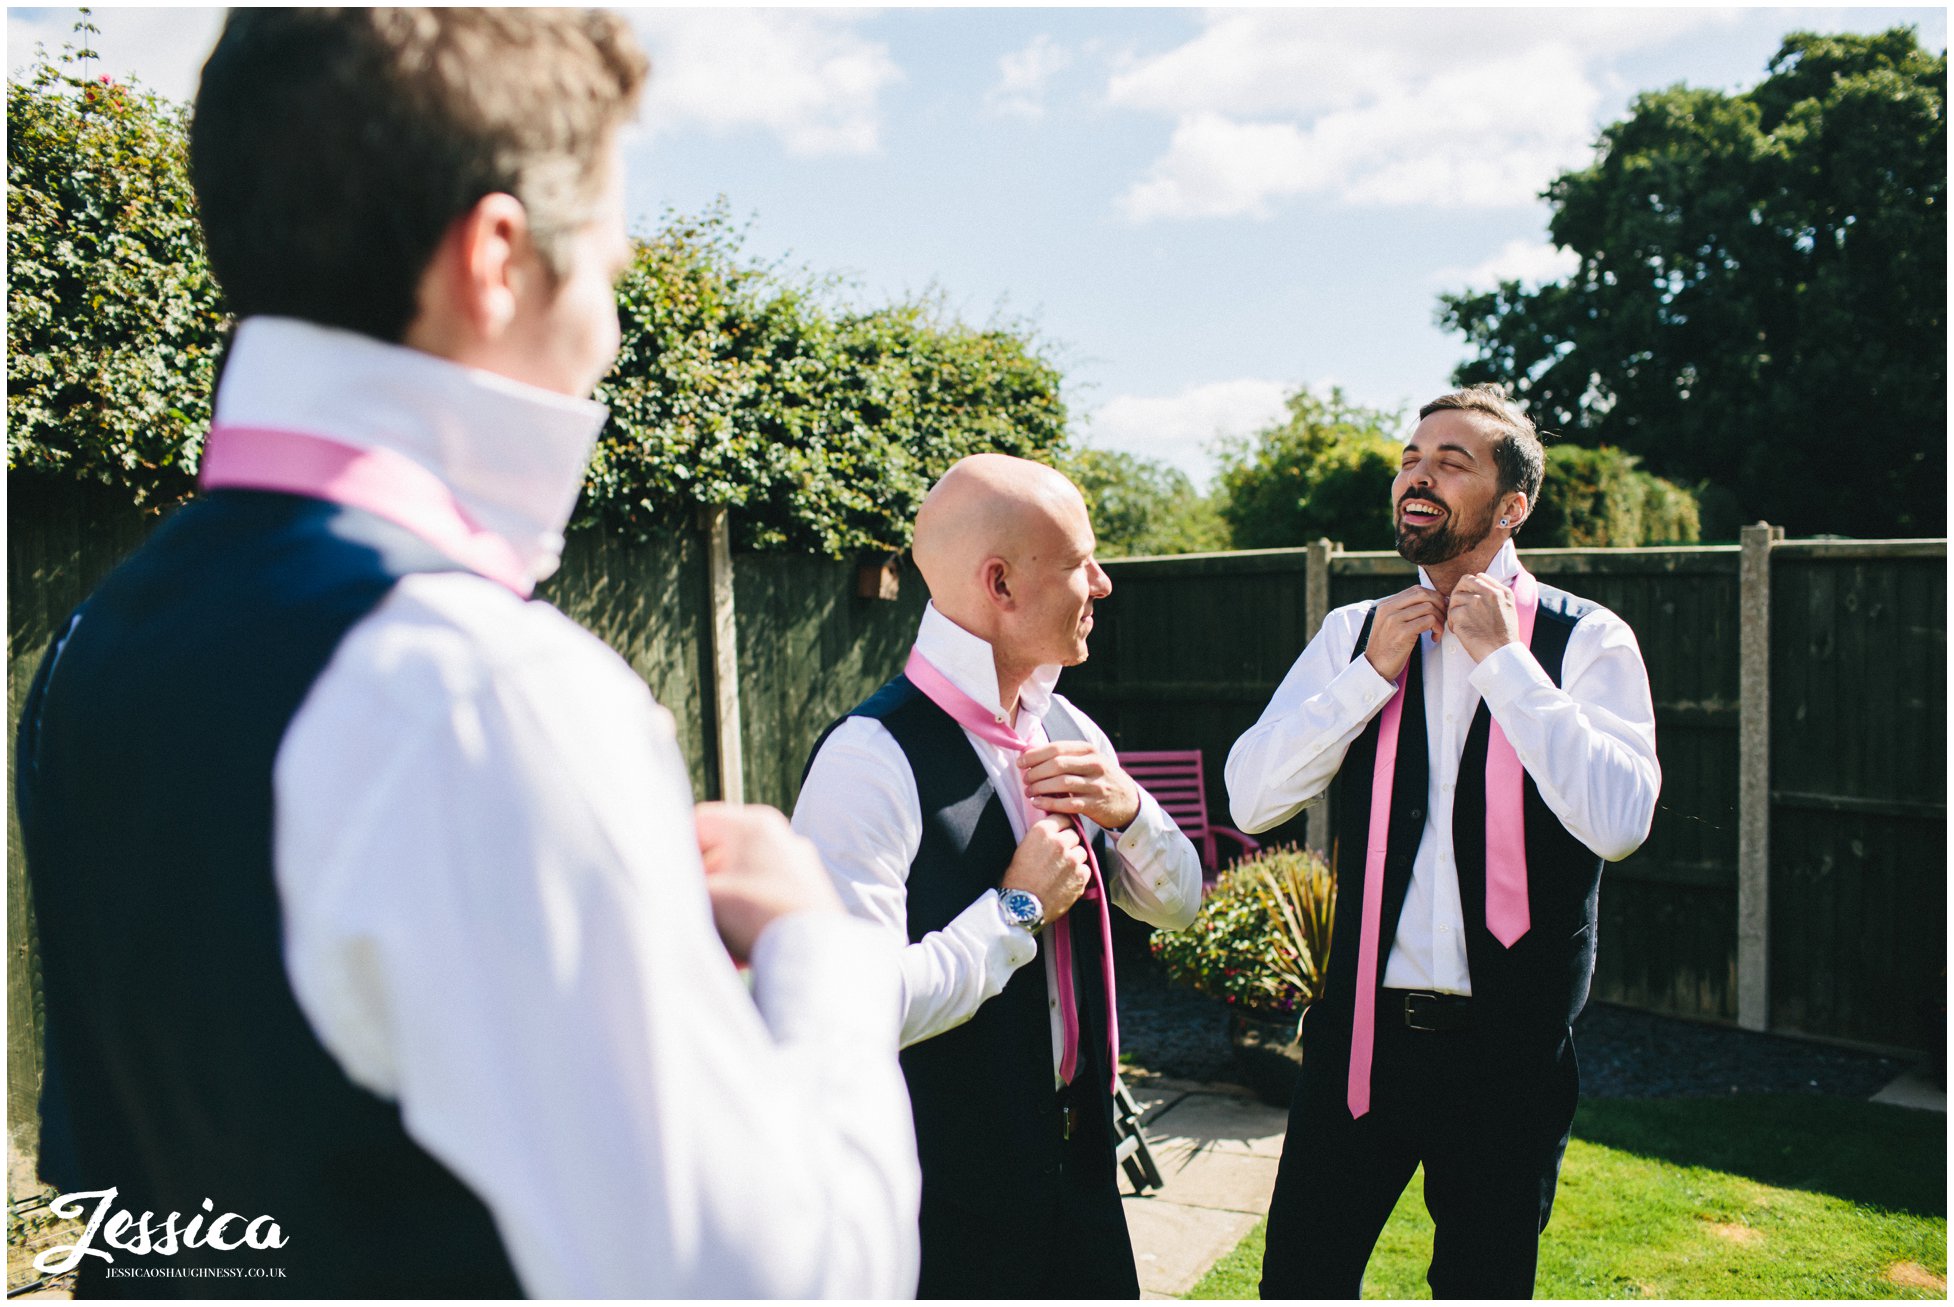 groomsmen fasten ties ahead of the wedding ceremony - north wales wedding